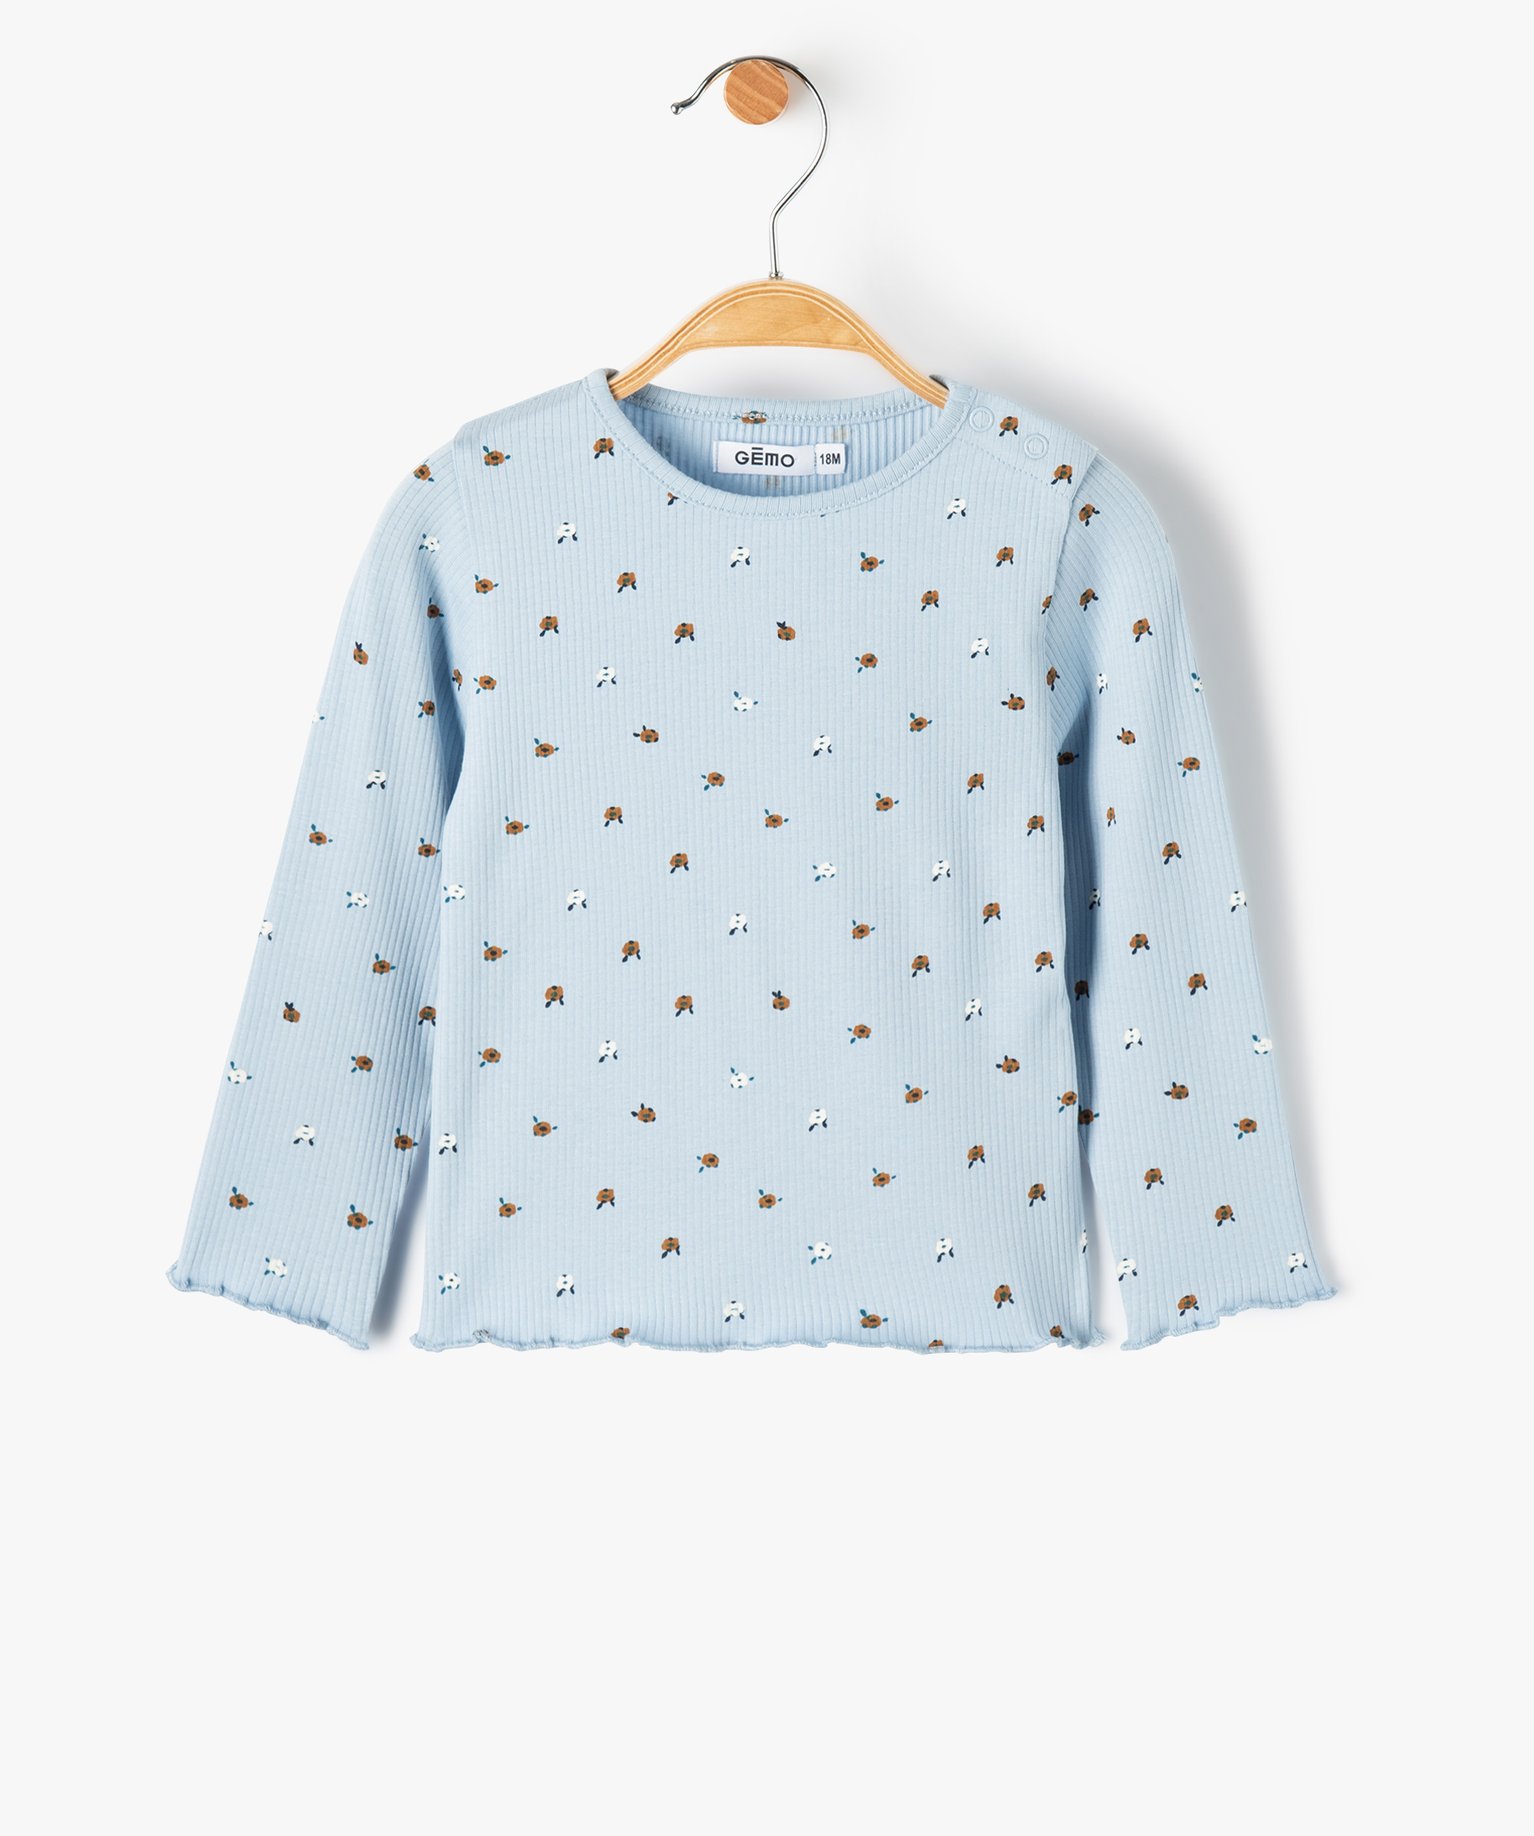 Tee-shirt bébé fille en maille côtelée à motifs fleuris - 3M - bleu - GEMO